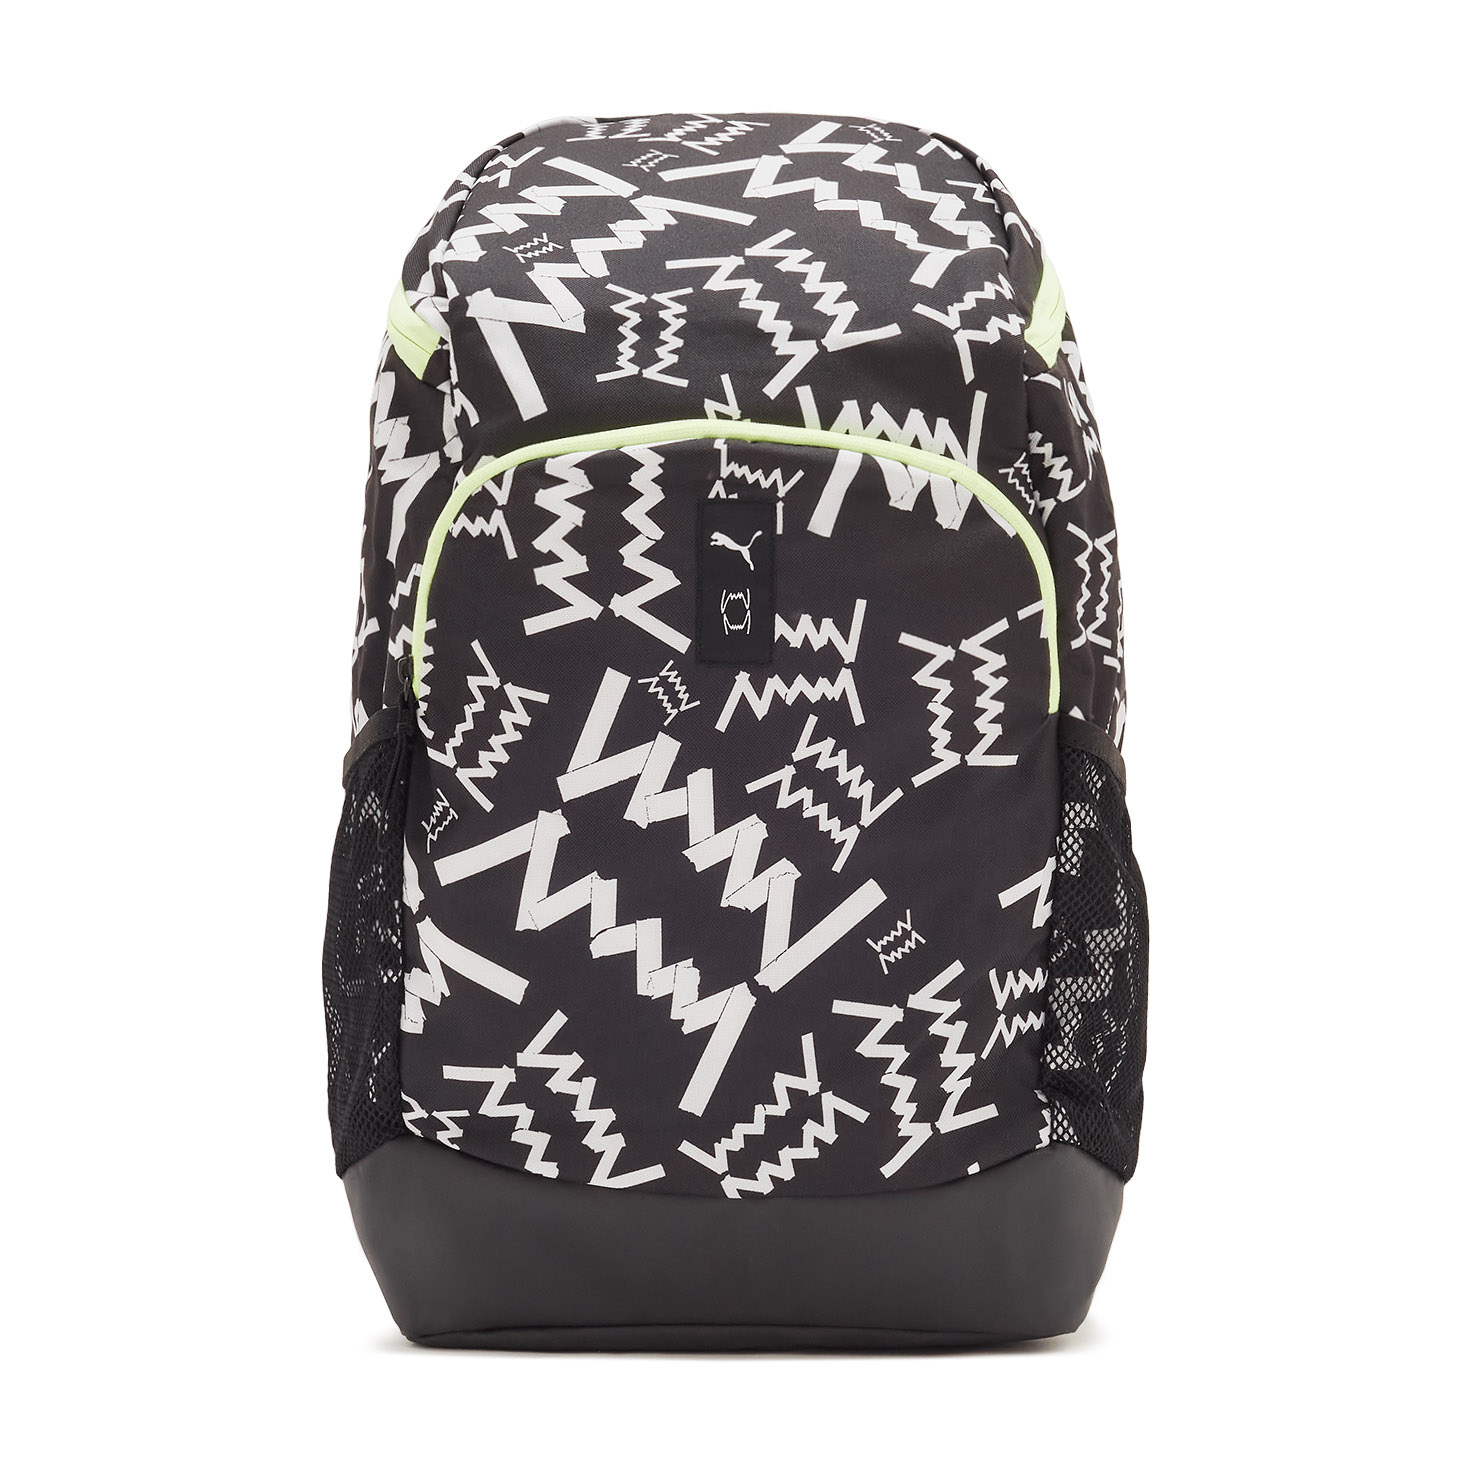 Basketball Backpack PUMA, размер Один размер, цвет черный PM079205 - фото 1